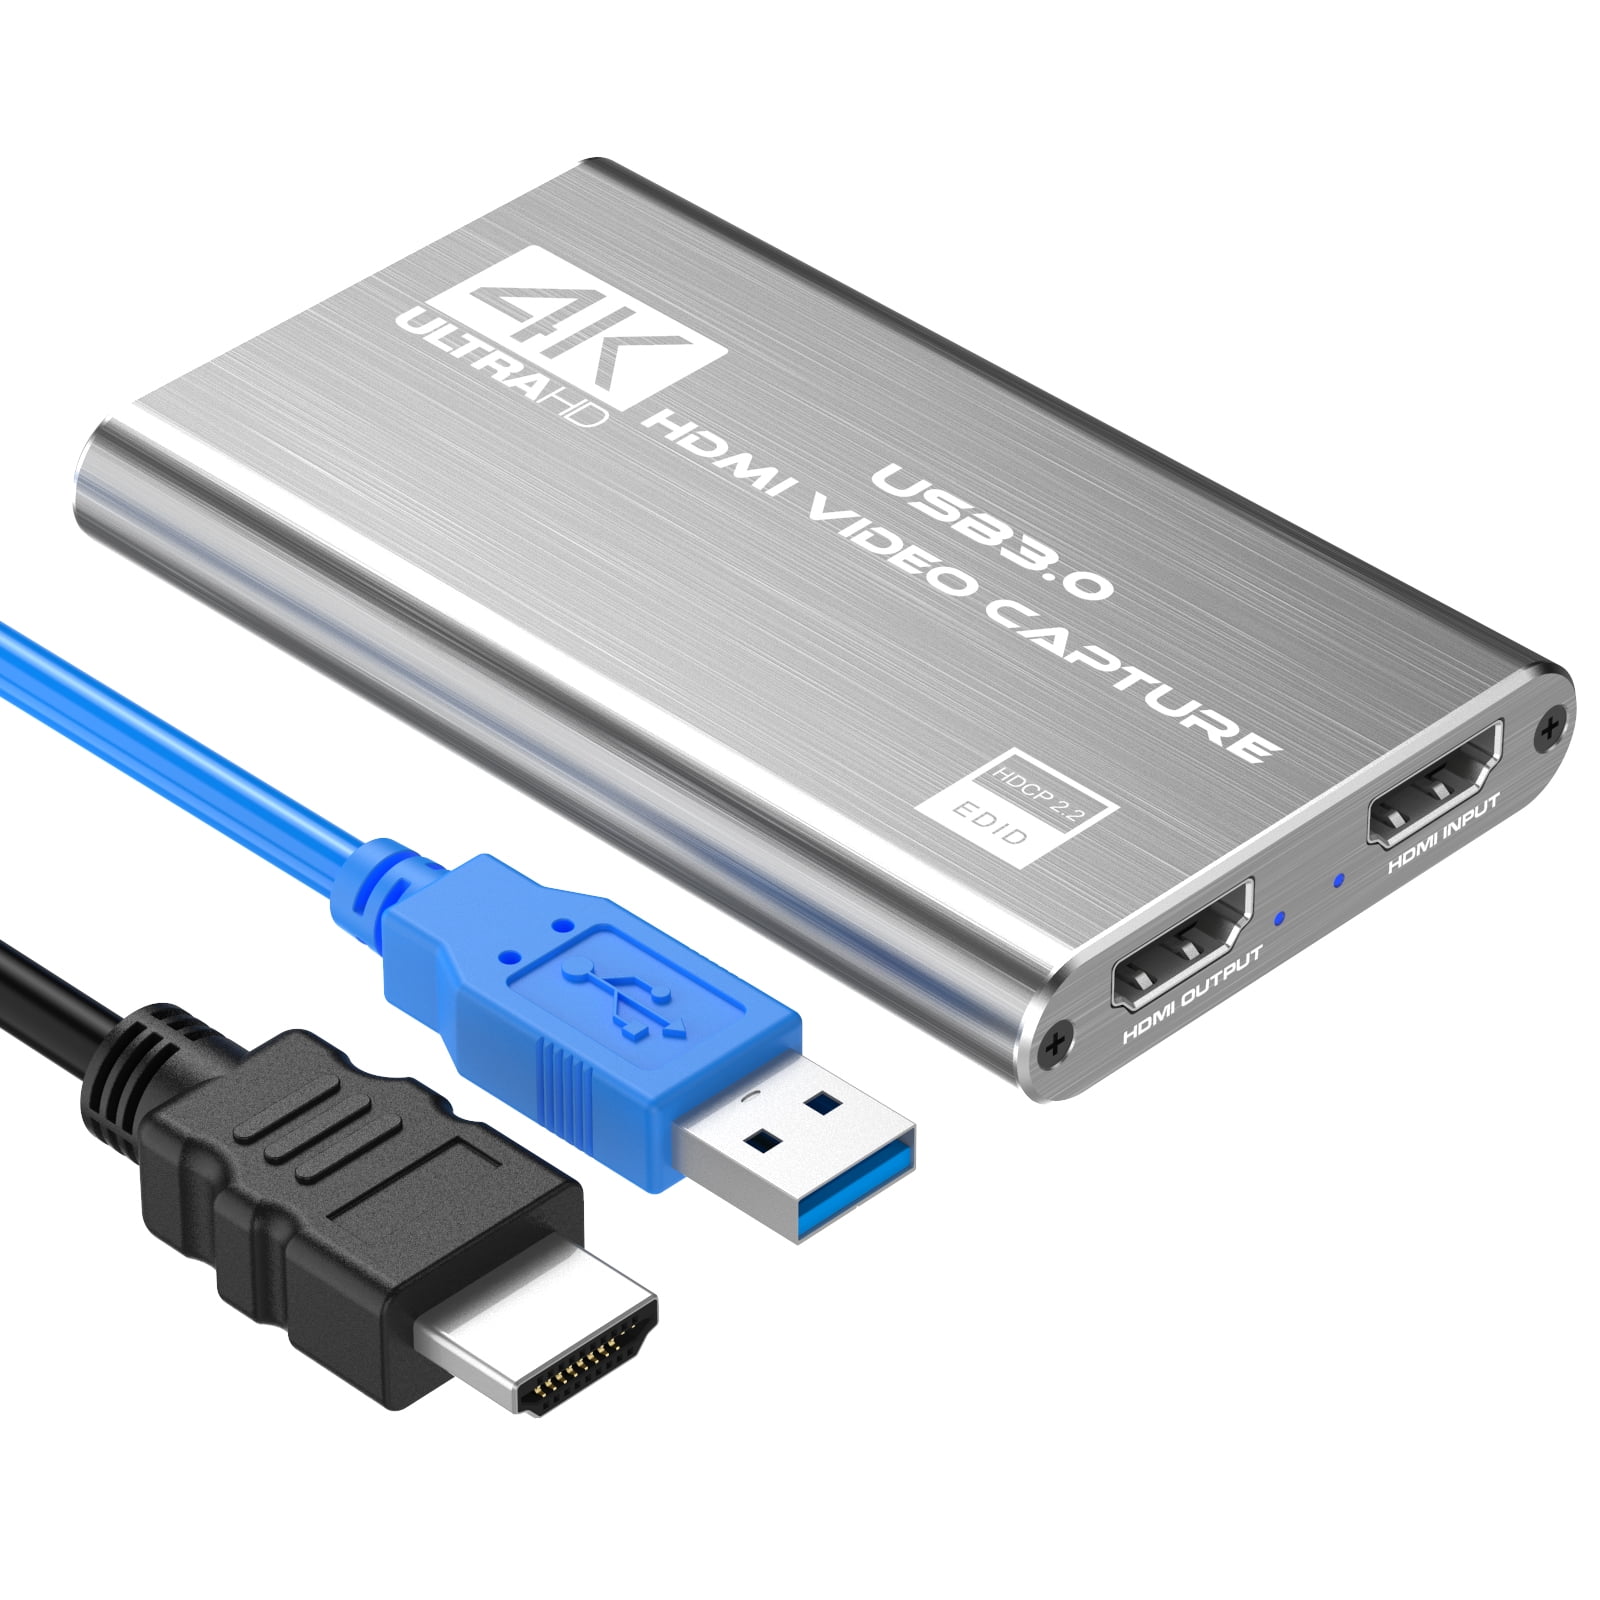 BlueAVS HDMI to USB Video Capture Card 1080P for Live Video Streaming  Record via DSLR Camcorder Action Cam - Capture 1080P@30Hz (Metal-Black)